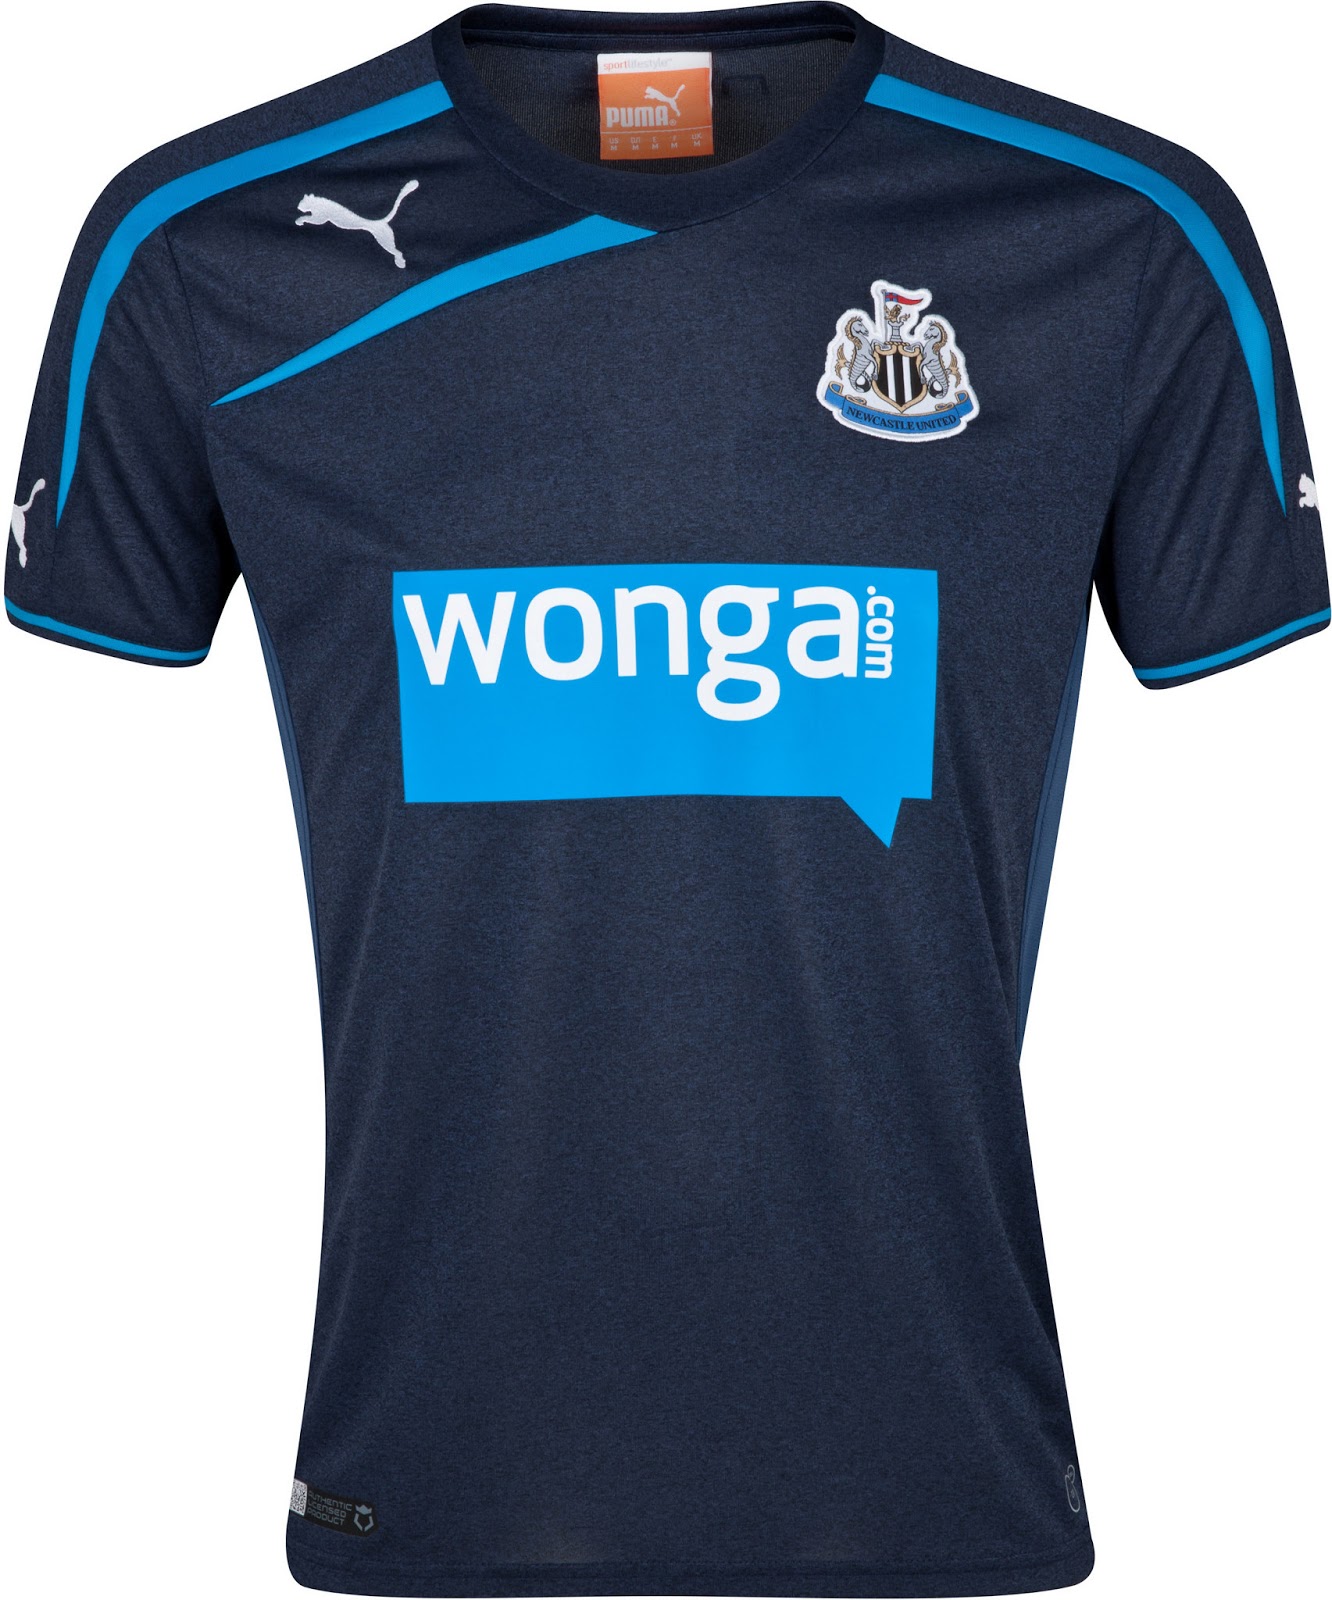 Newcastle Utd uitshirt 2013/2014